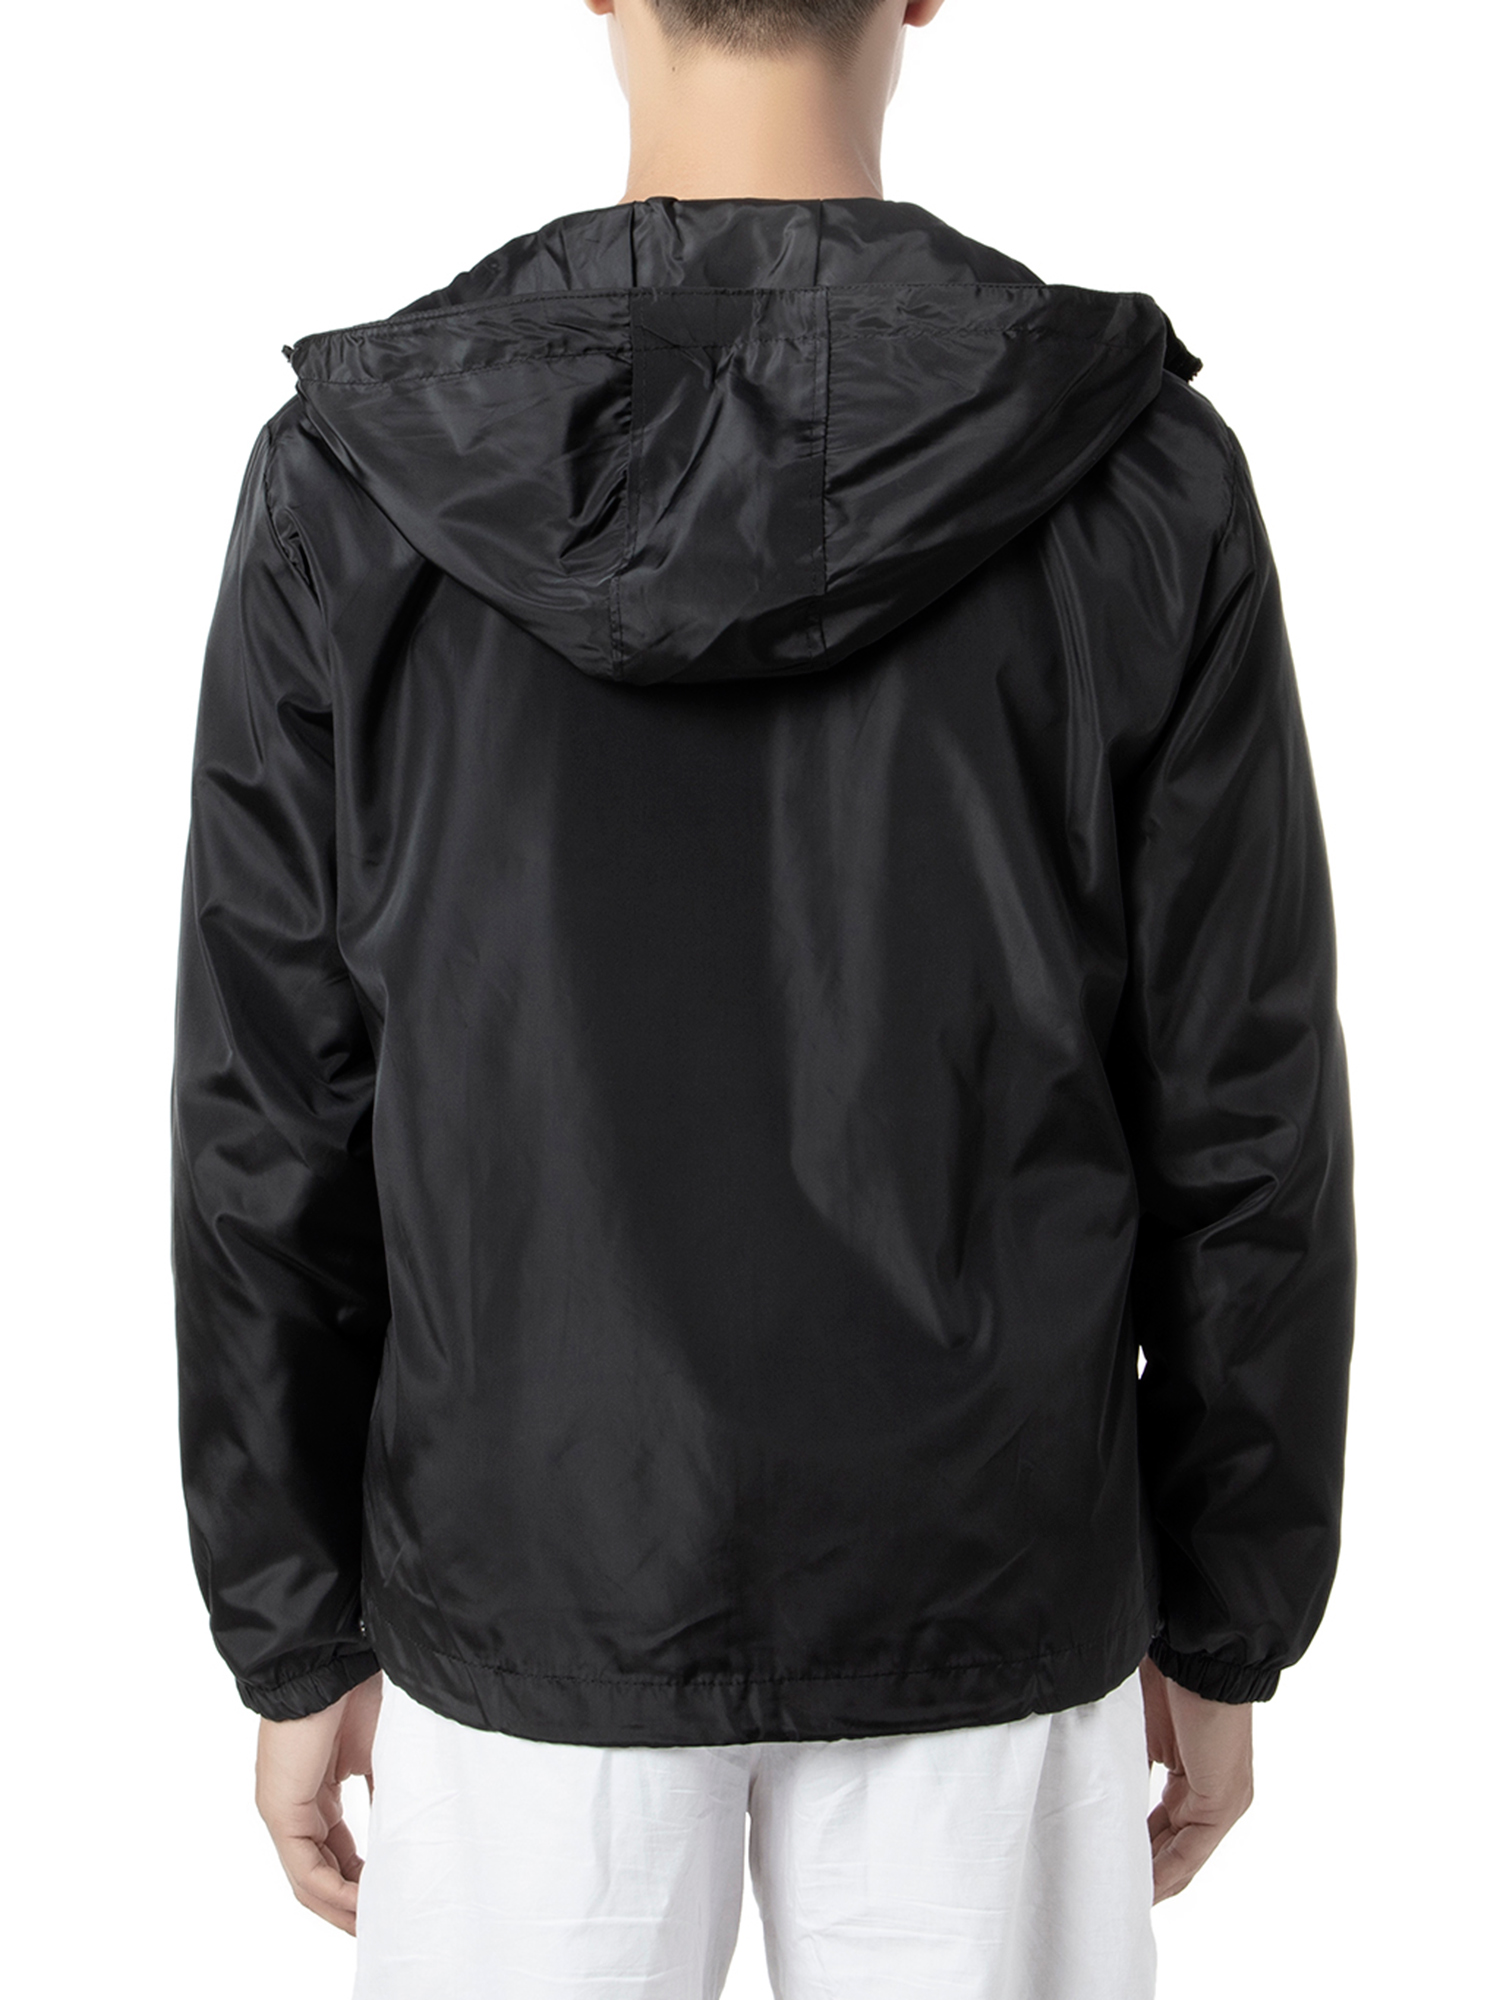 Youloveit Men's Winter Lightweight Jacket Windbreaker Waterproof Hooded Jackets Outdoor Sport Rain Jacket, Zip Up & Water-Resistant Size 4XL-7XL - image 4 of 8